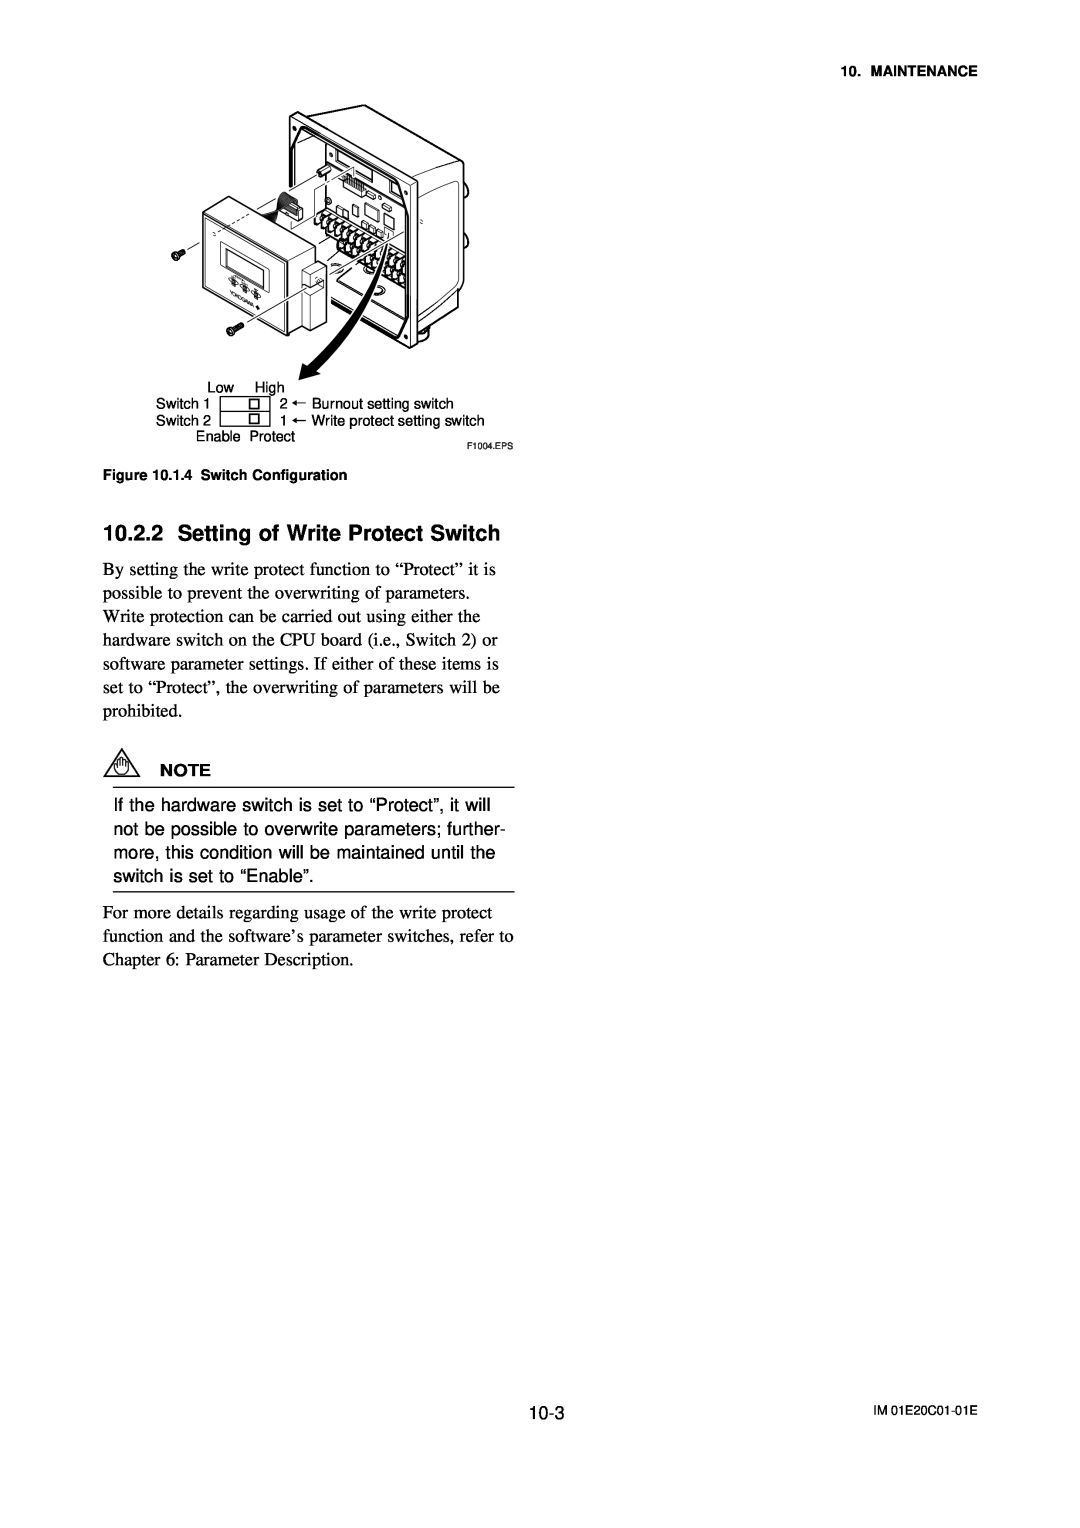 APC AXFA11G user manual Setting of Write Protect Switch, 10-3 